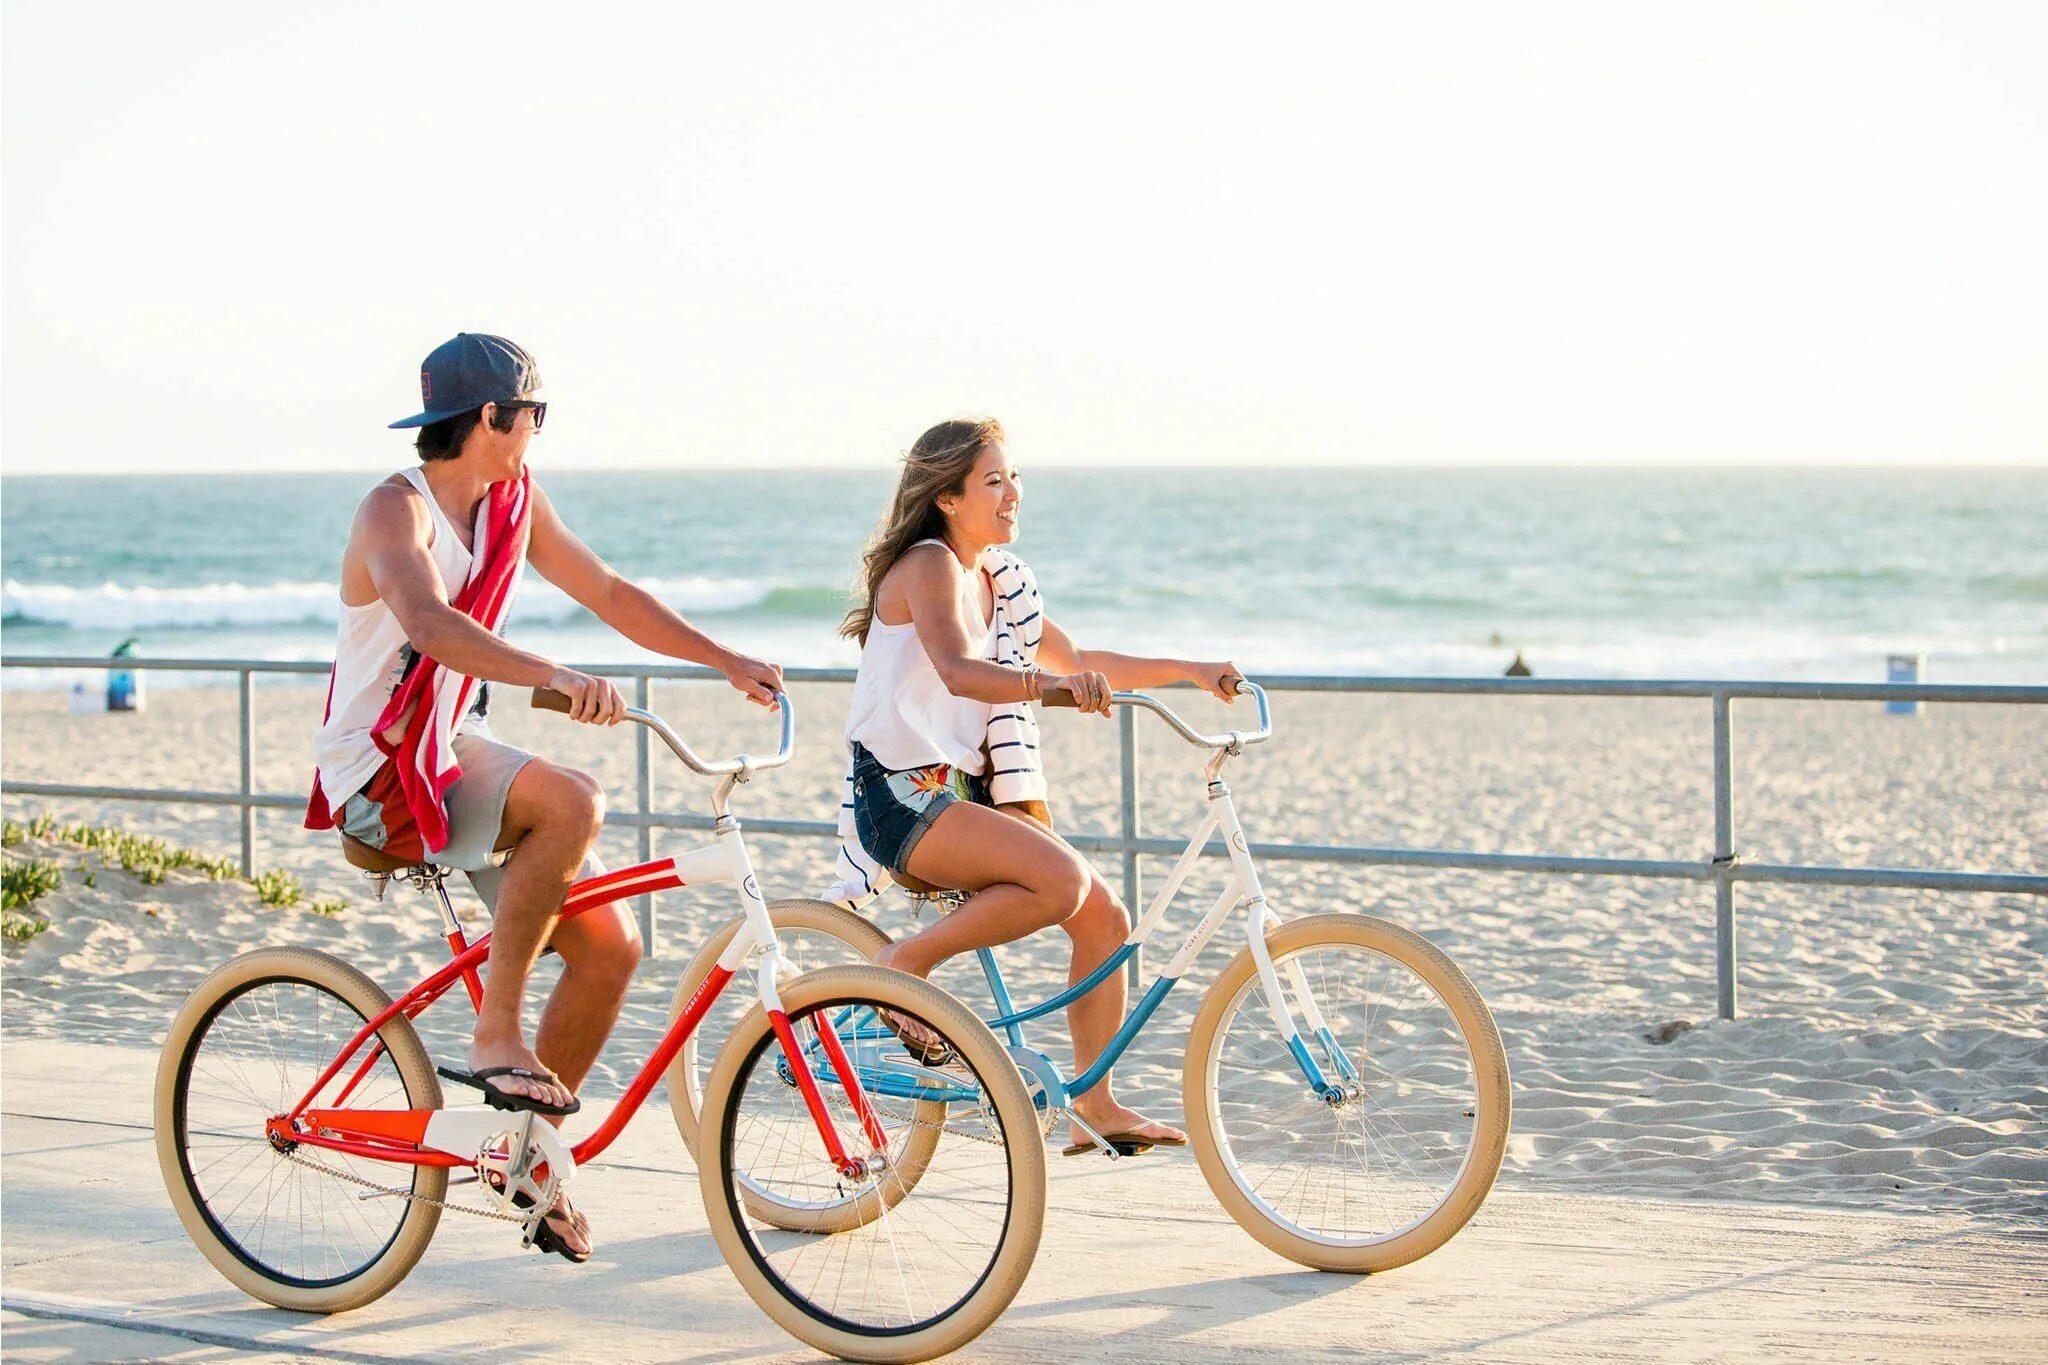 Велосипед на пляже. Велосипед пляжный круизер. Круизер велосипед пляж. Тайланд велосипед. Ride their bikes